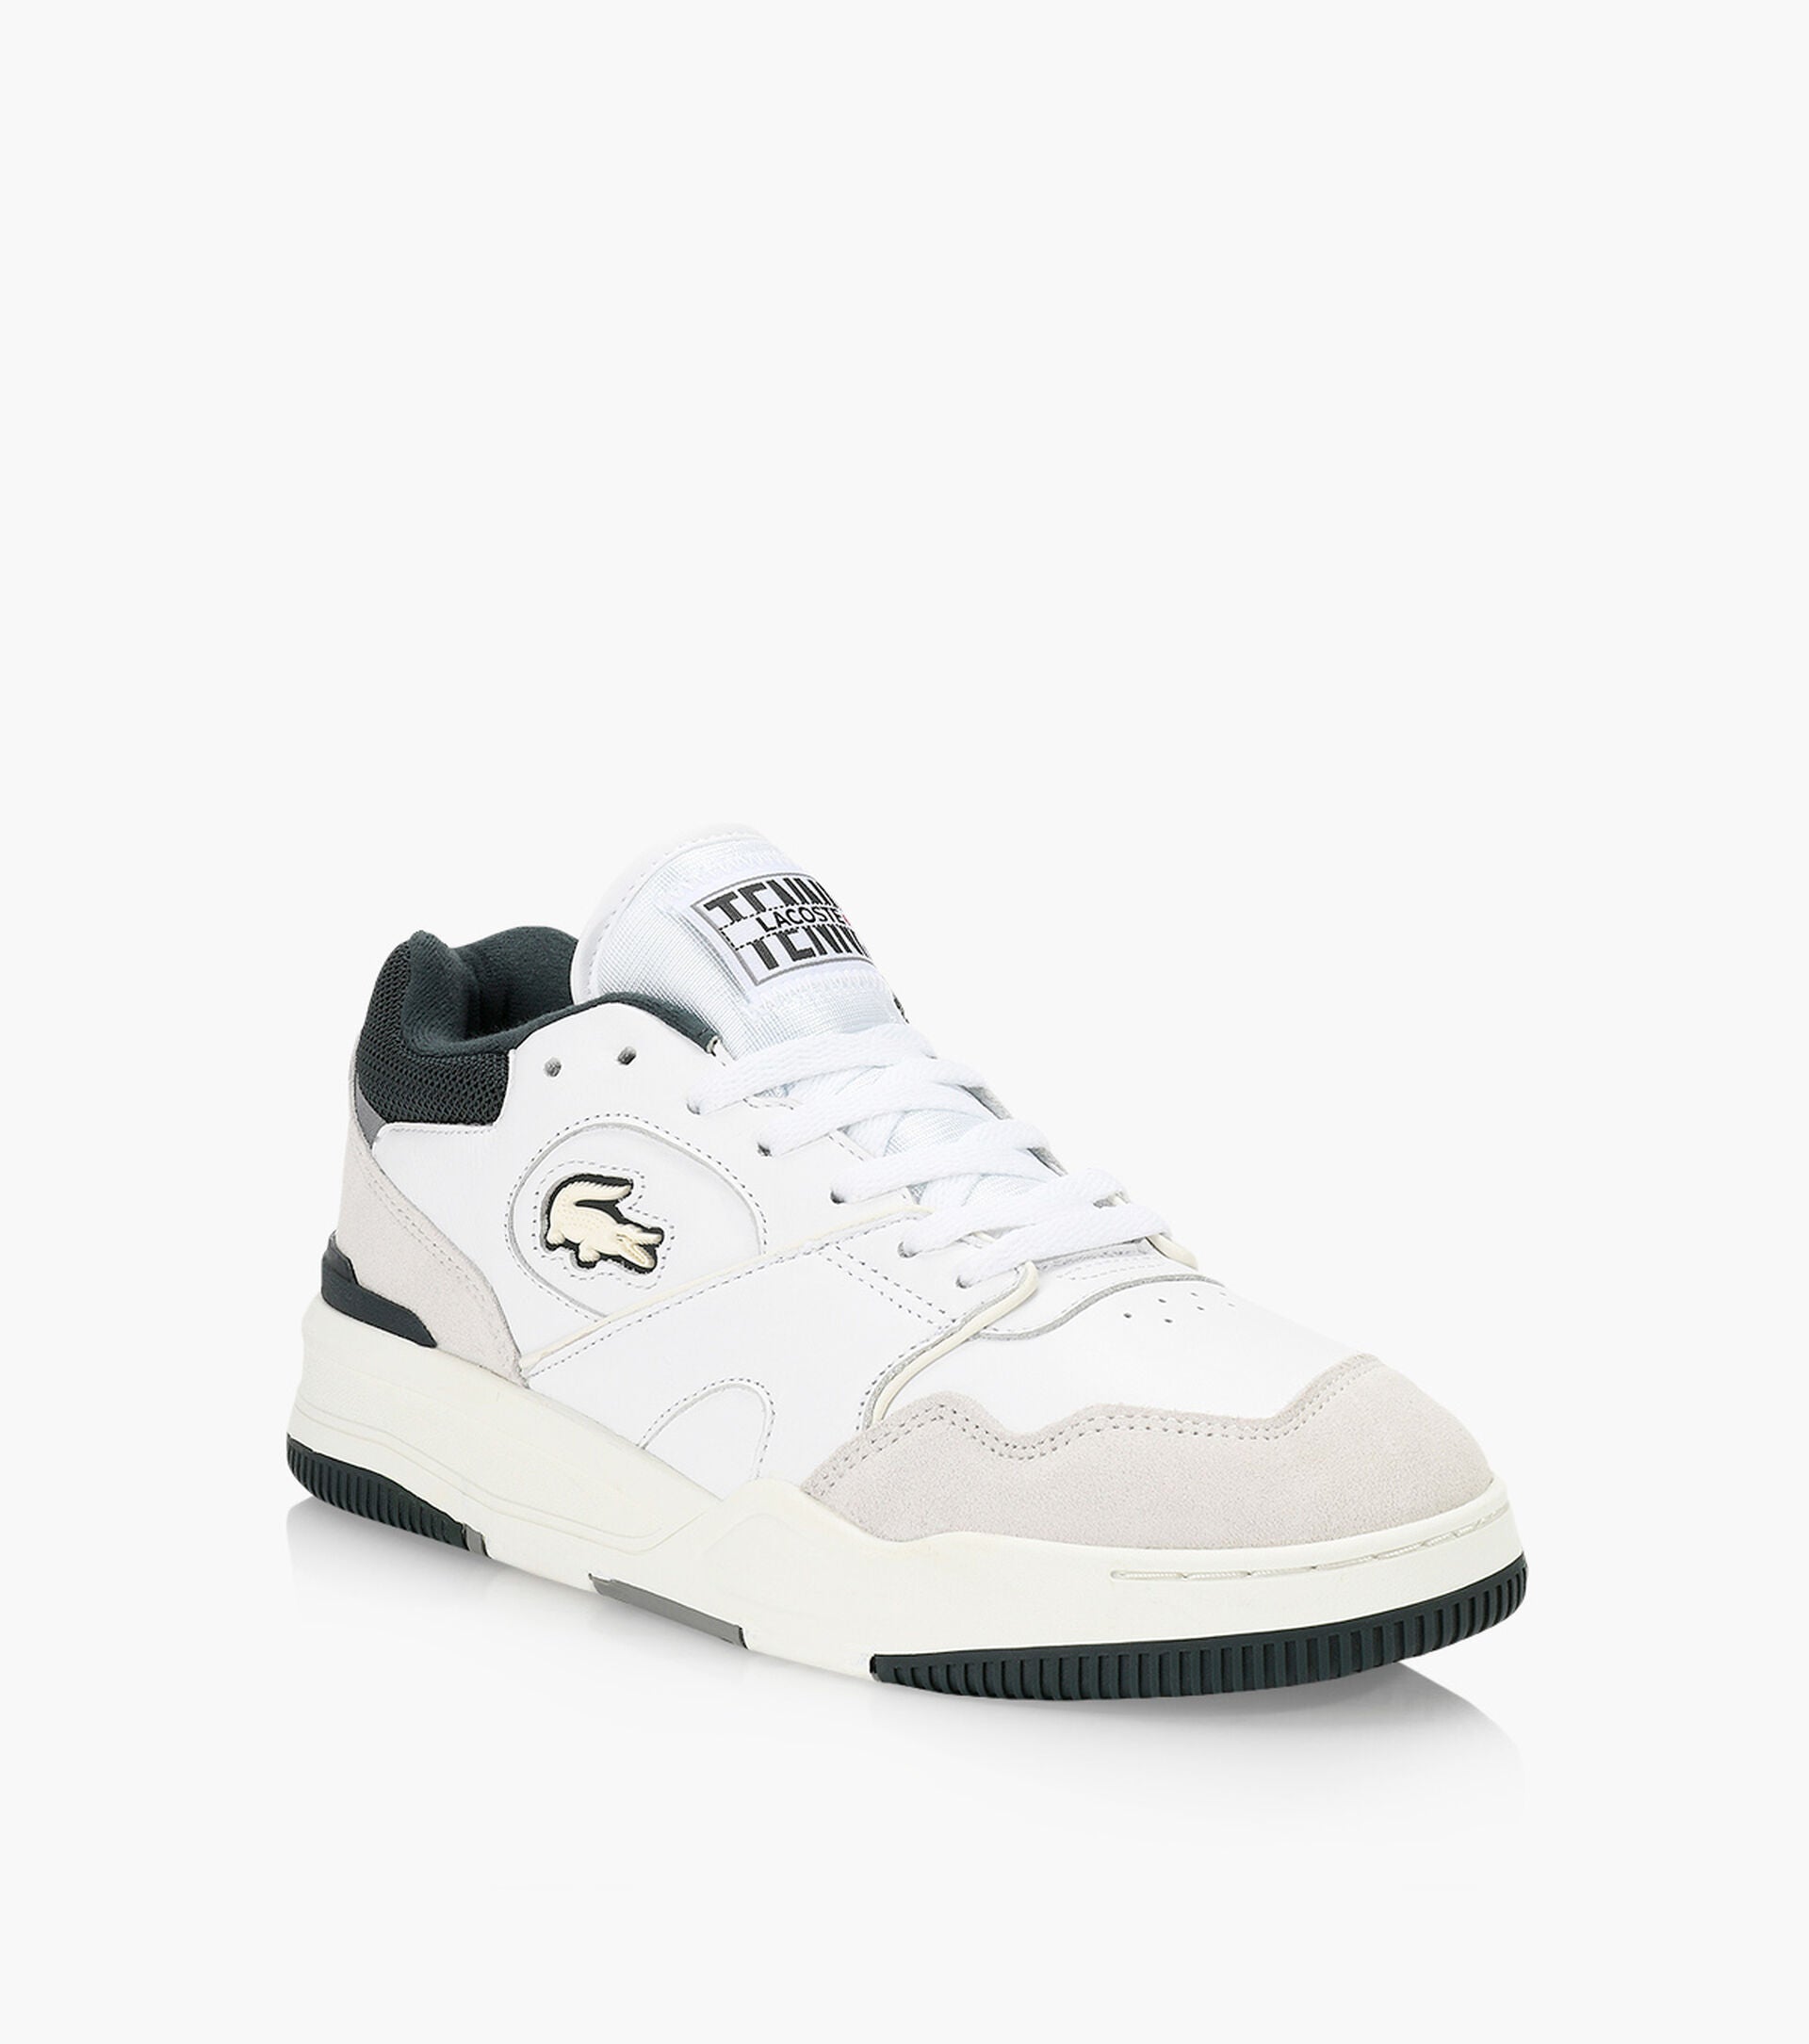 Lineshot Leather Sneakers White/Dark Green